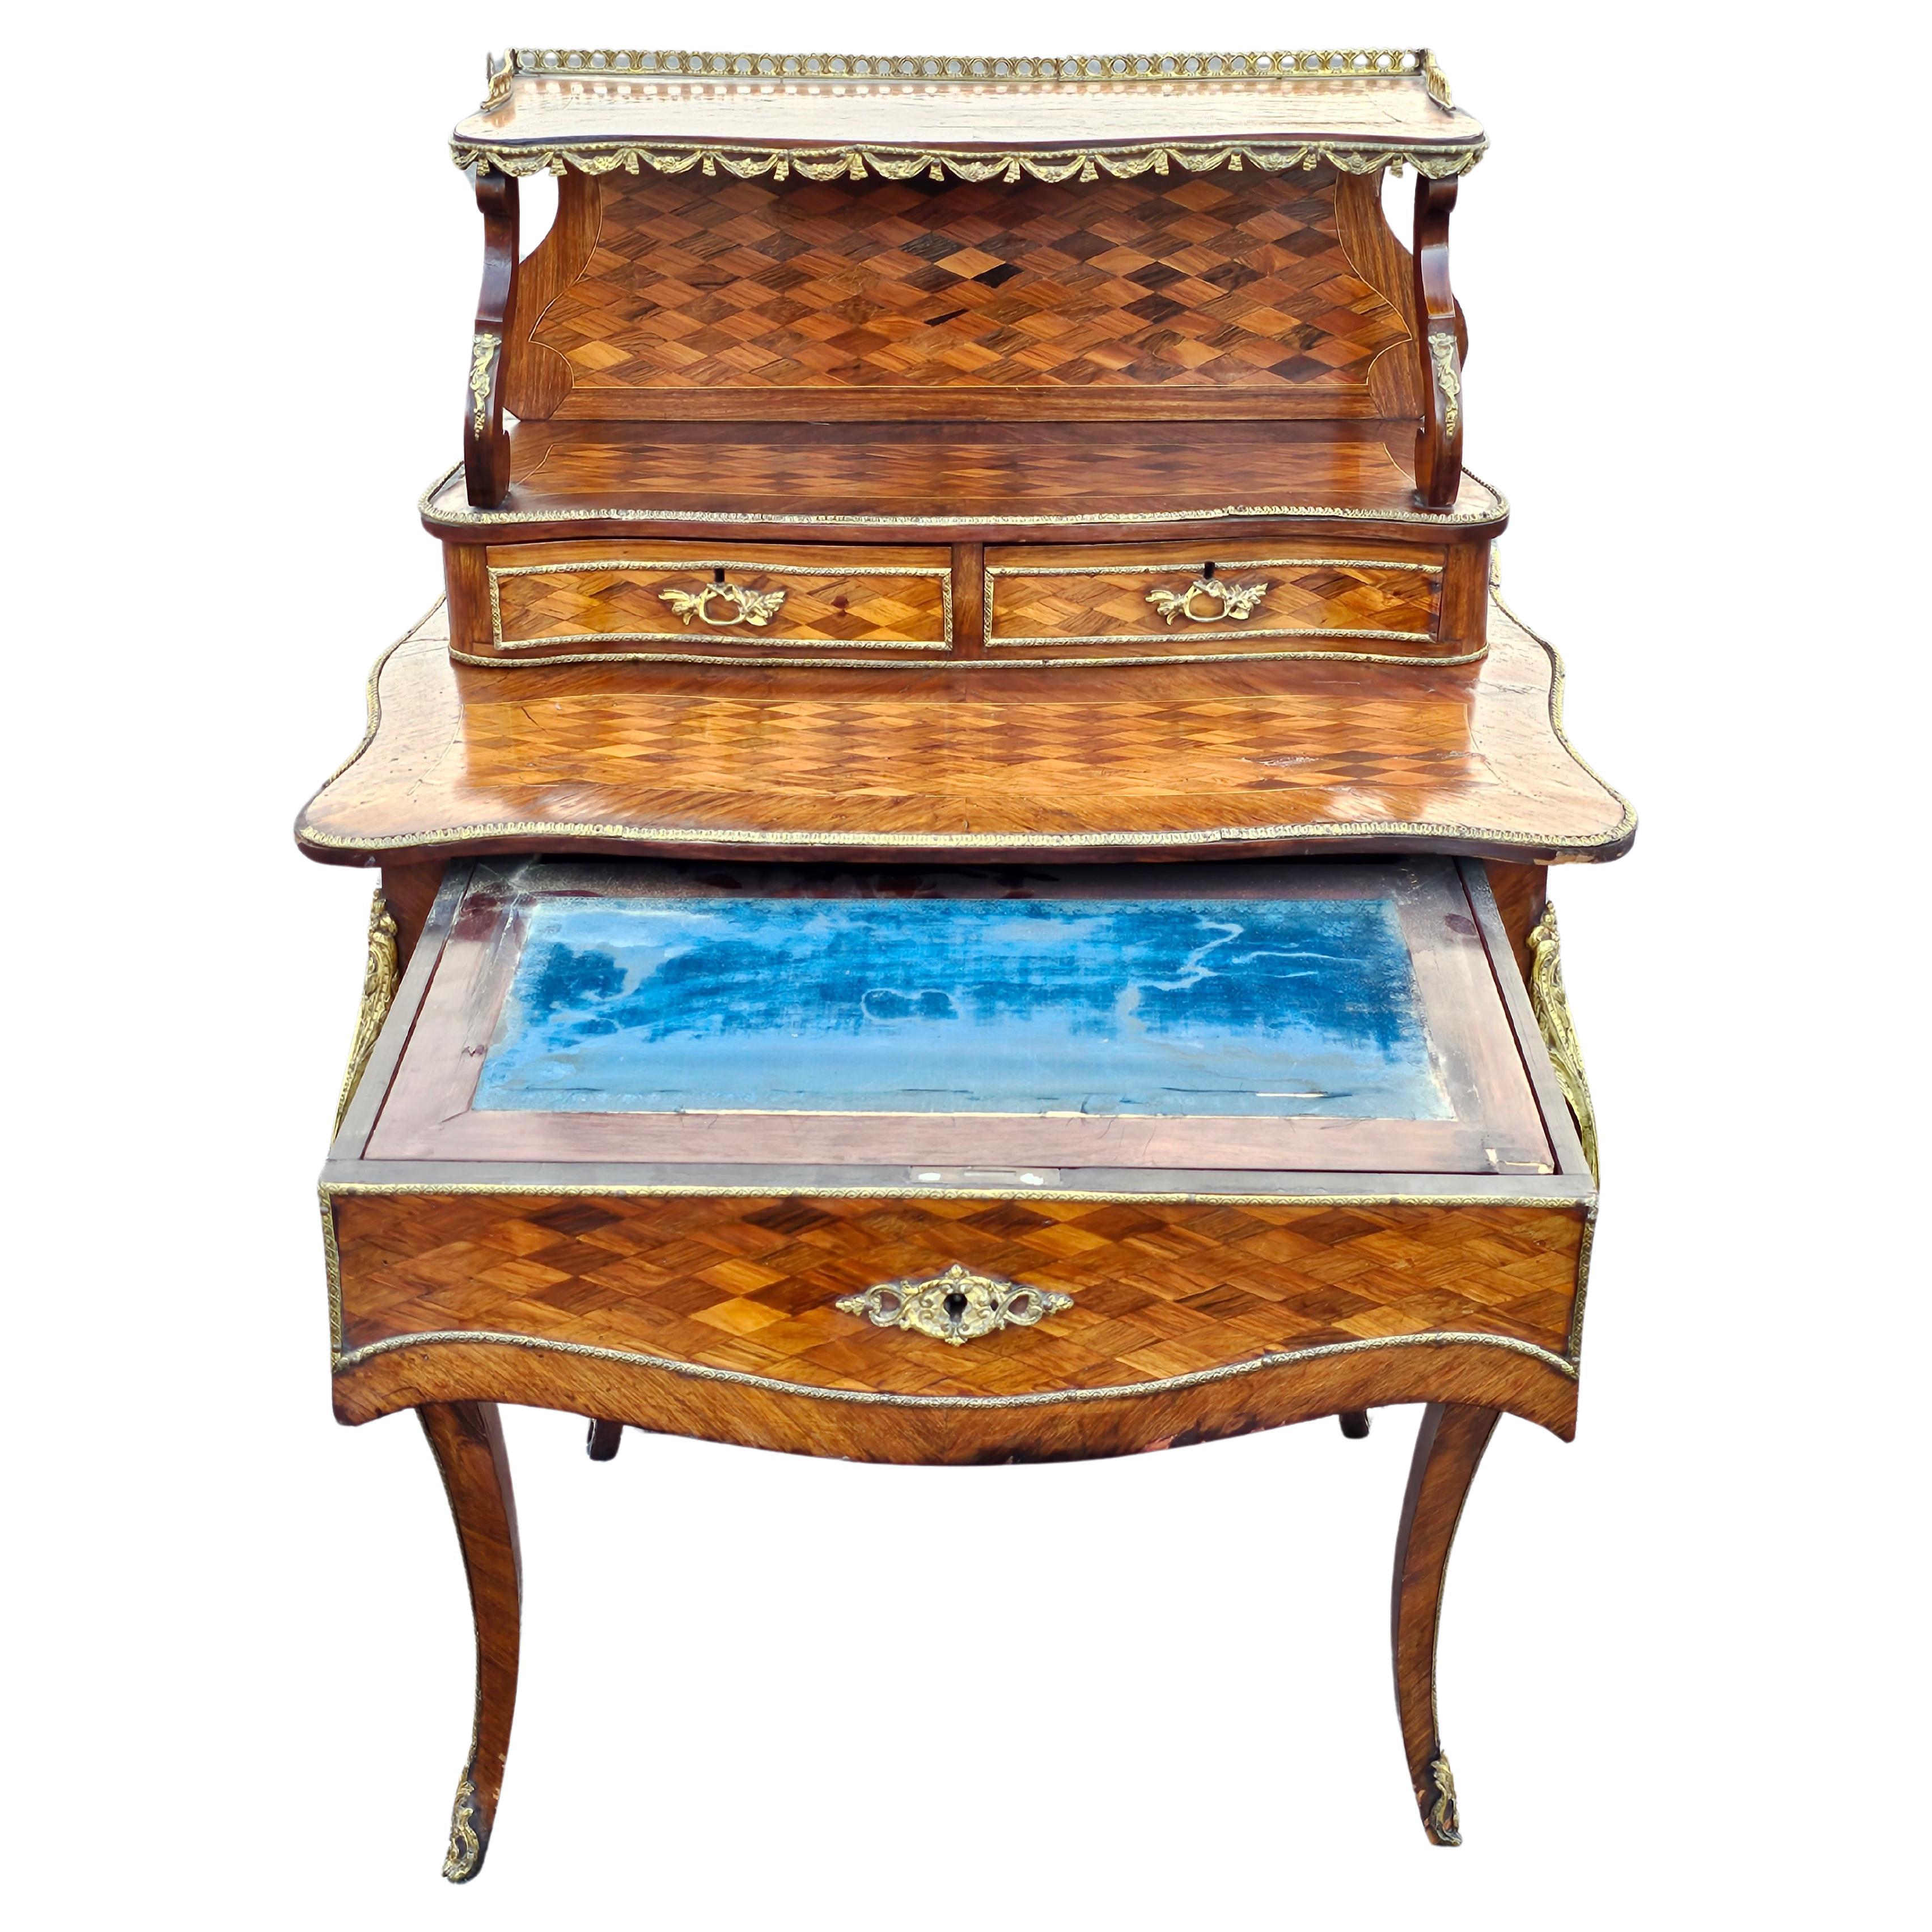 19th Century 19th C. Louis XV Style Kingwood Marquetry & Ormolu Bonheur Du Jour Writing Desk For Sale